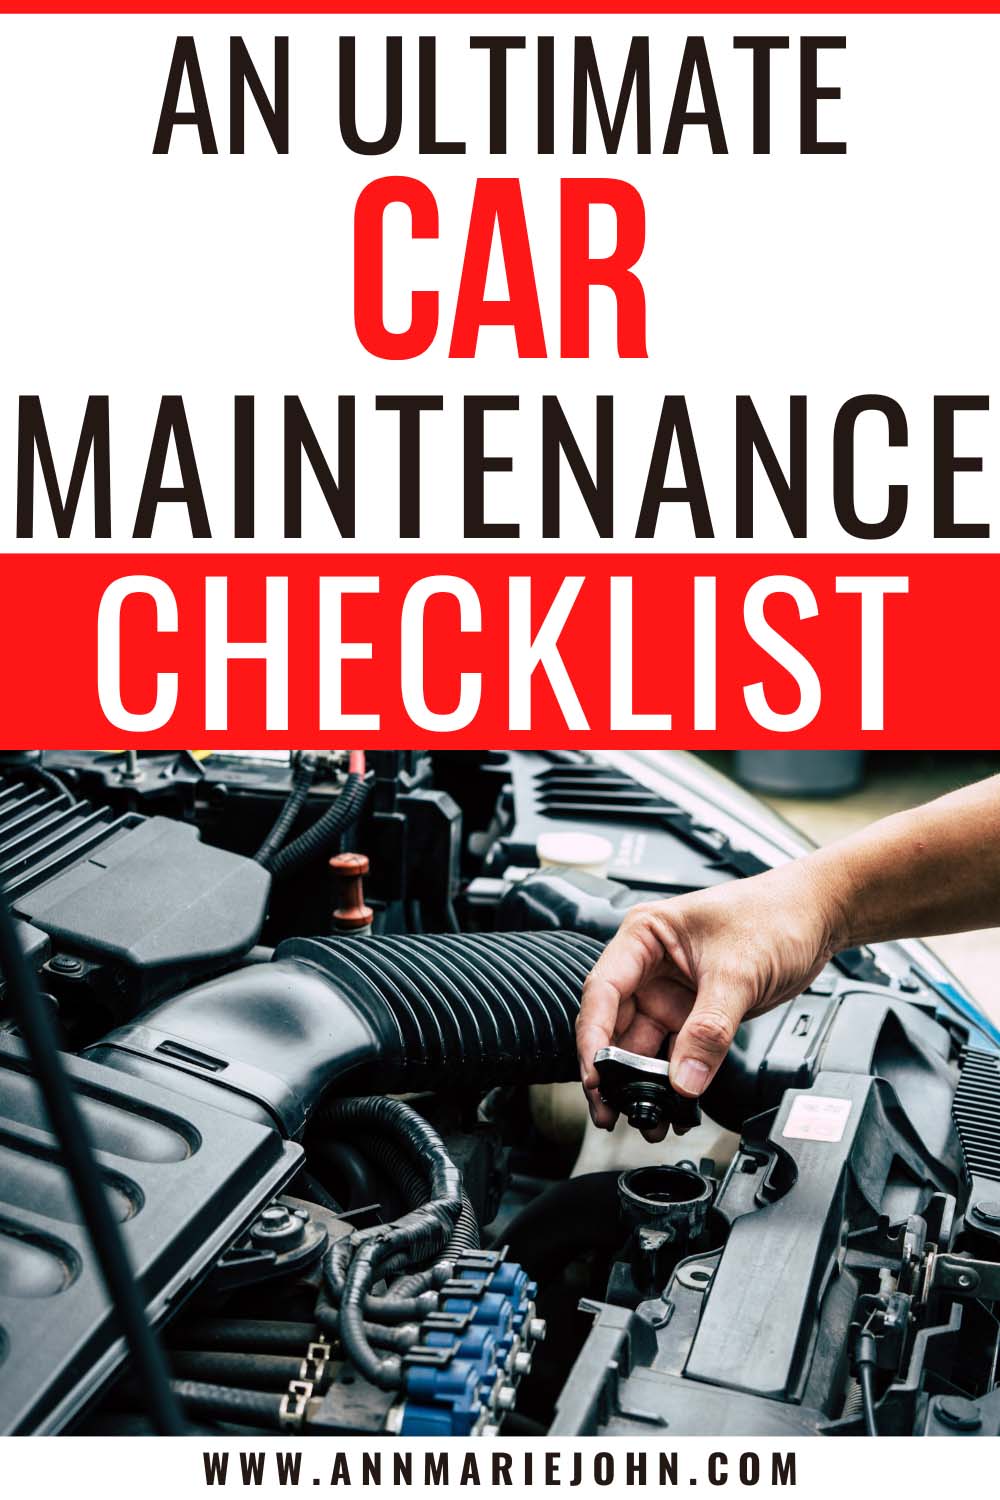 An Ultimate Car Maintenance Checklist